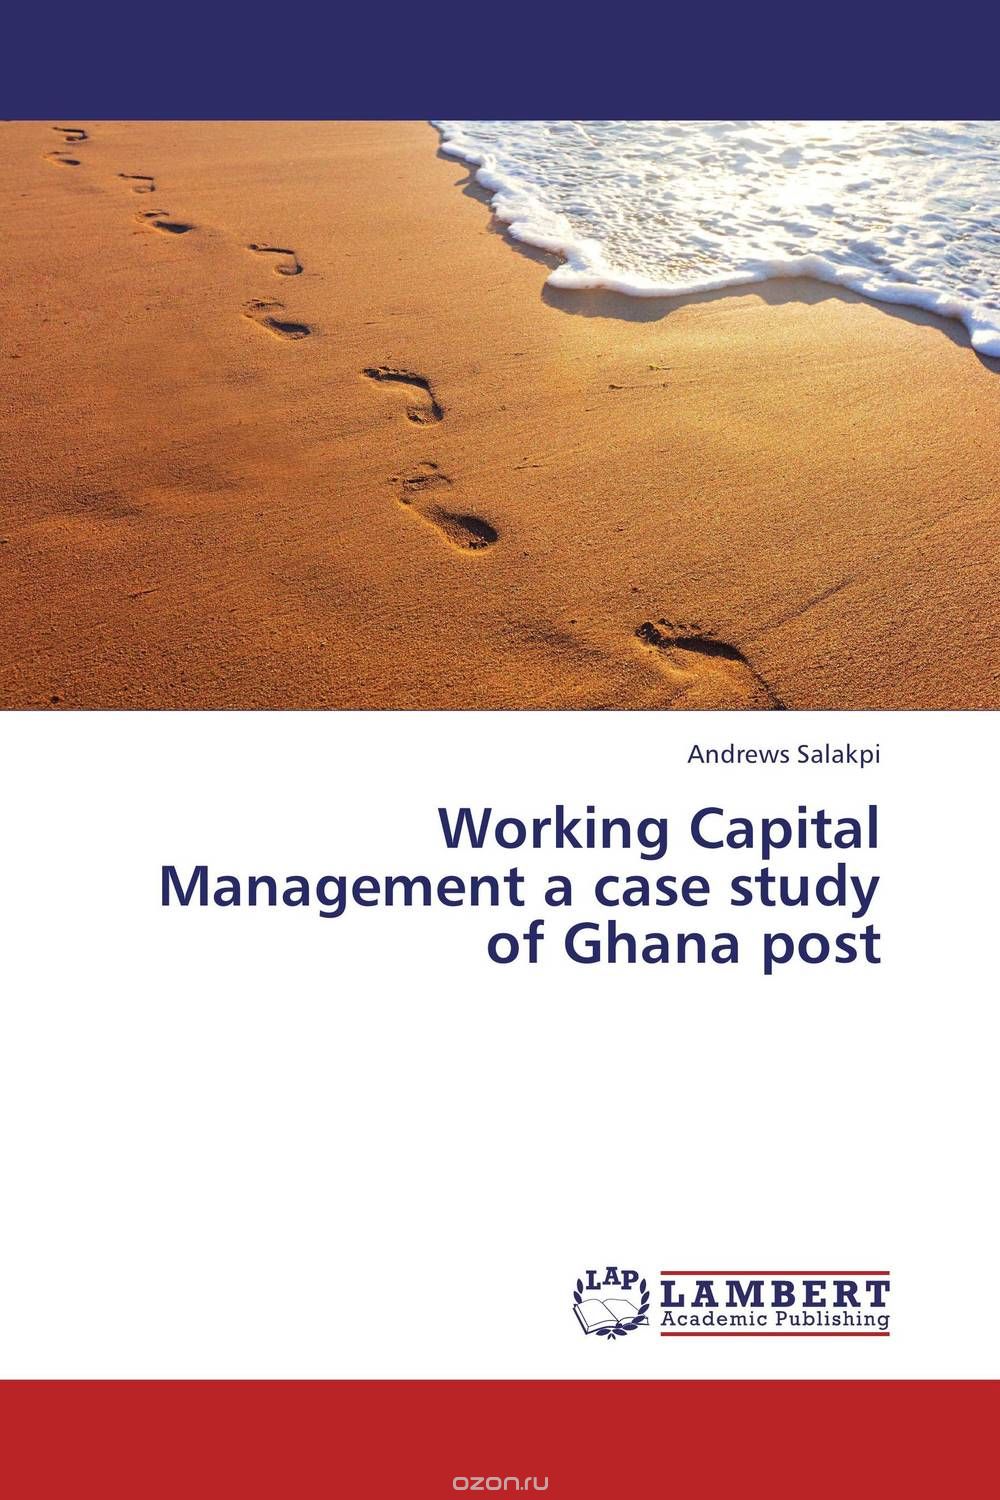 Скачать книгу "Working Capital Management  a case study of Ghana post"